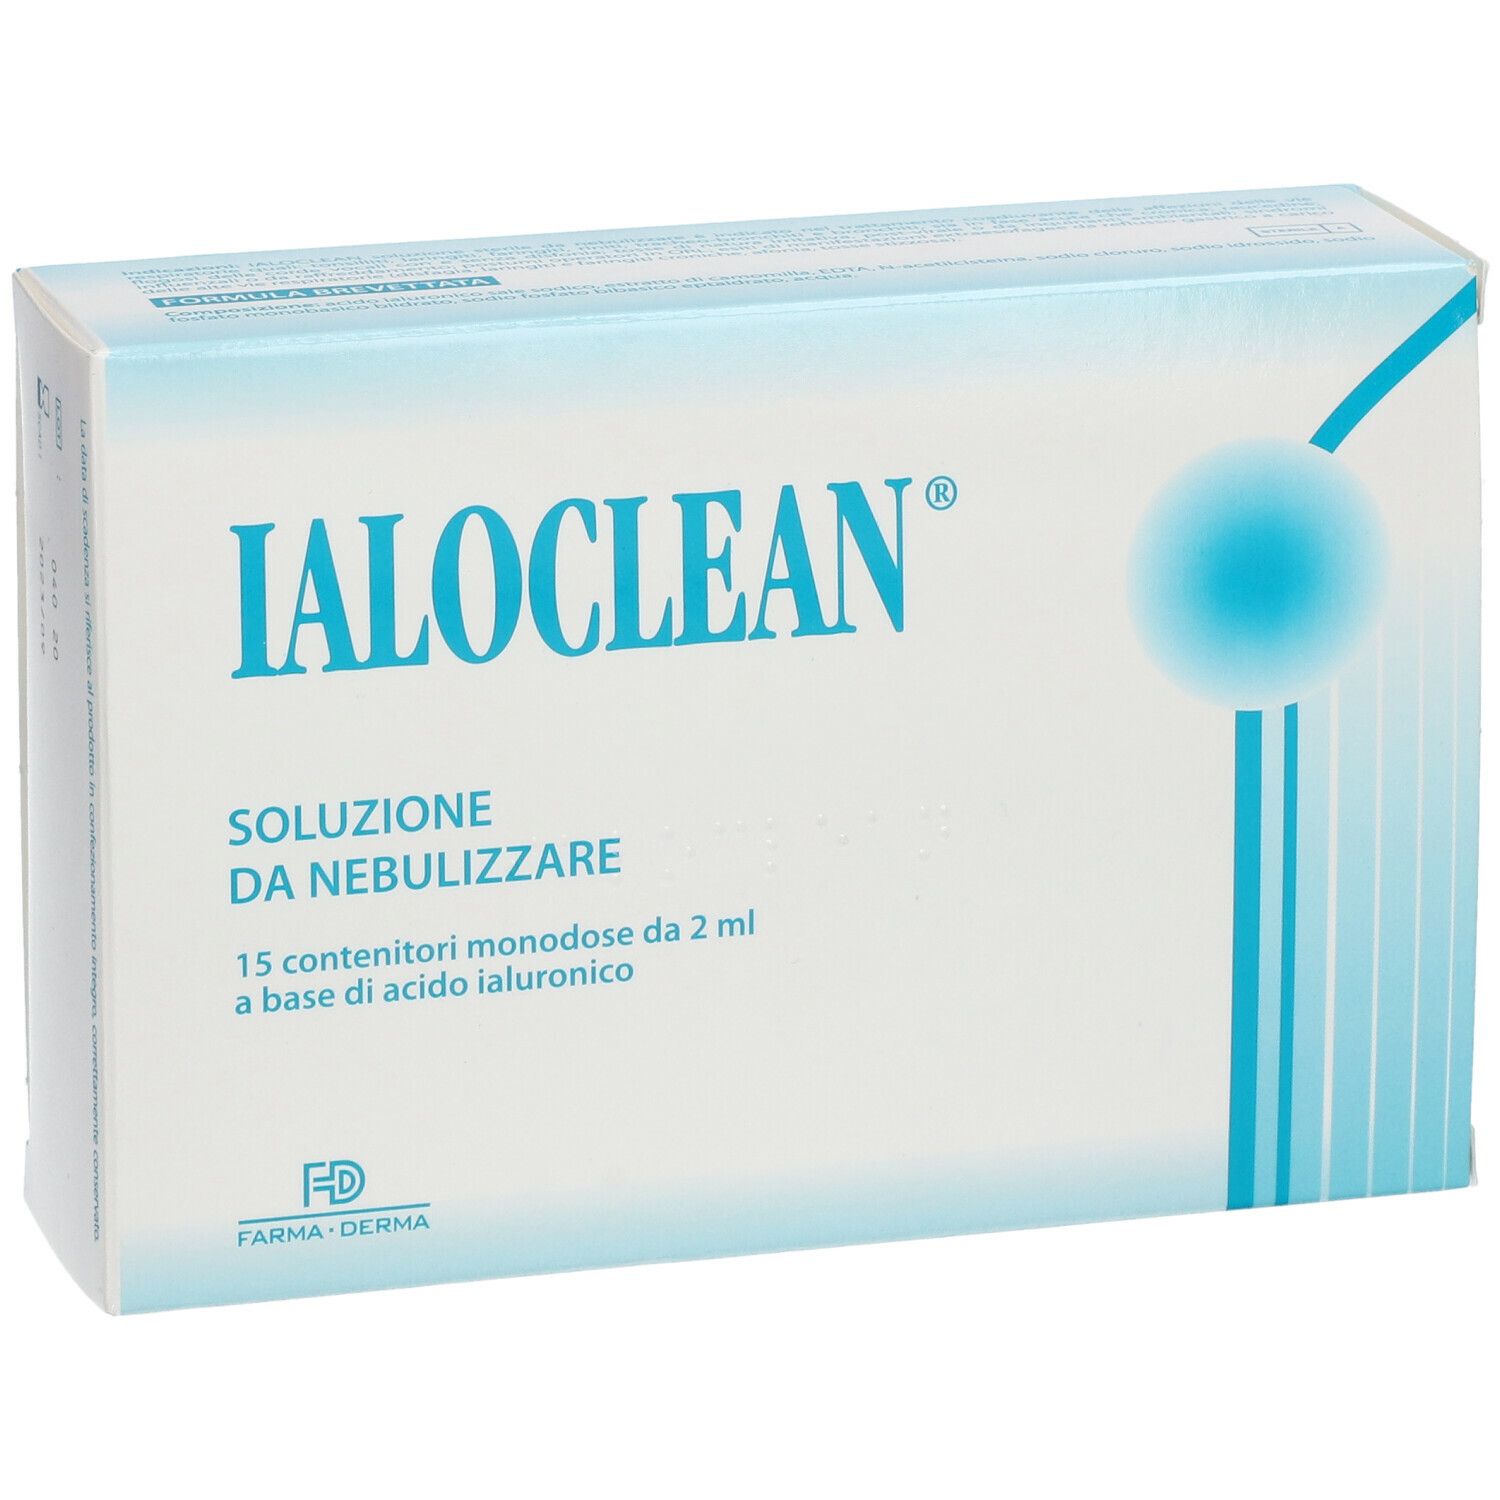 Ialoclean® Soluzione da Nebulizzare